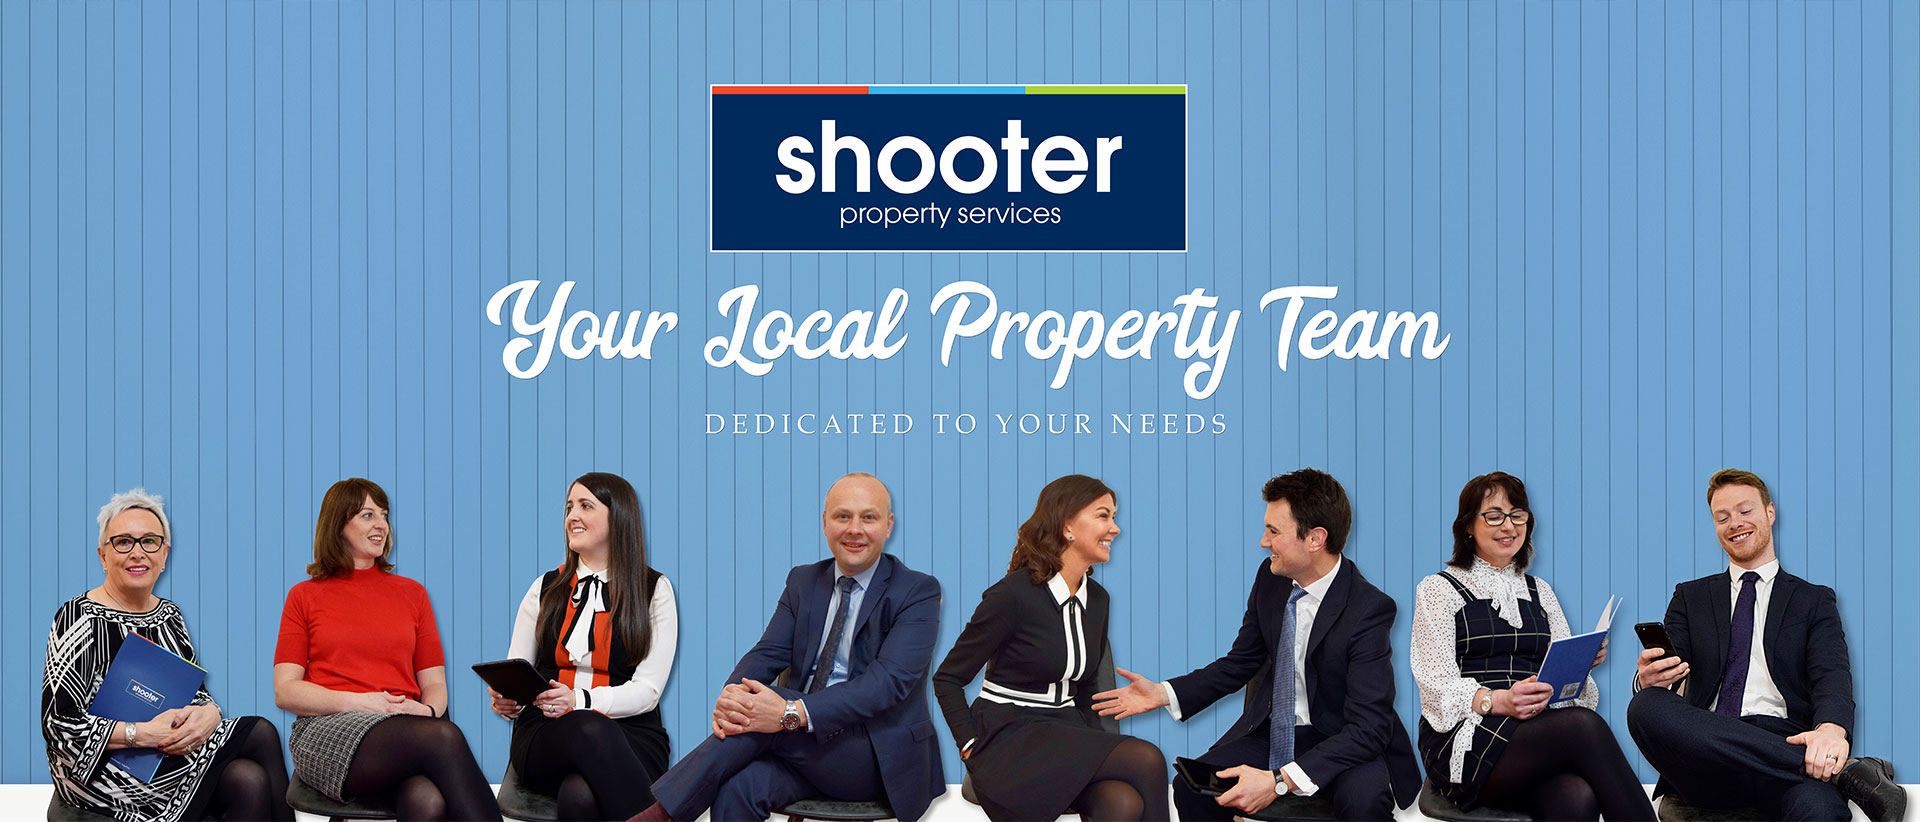 Shooter Property Services (Banbridge) Group Shot